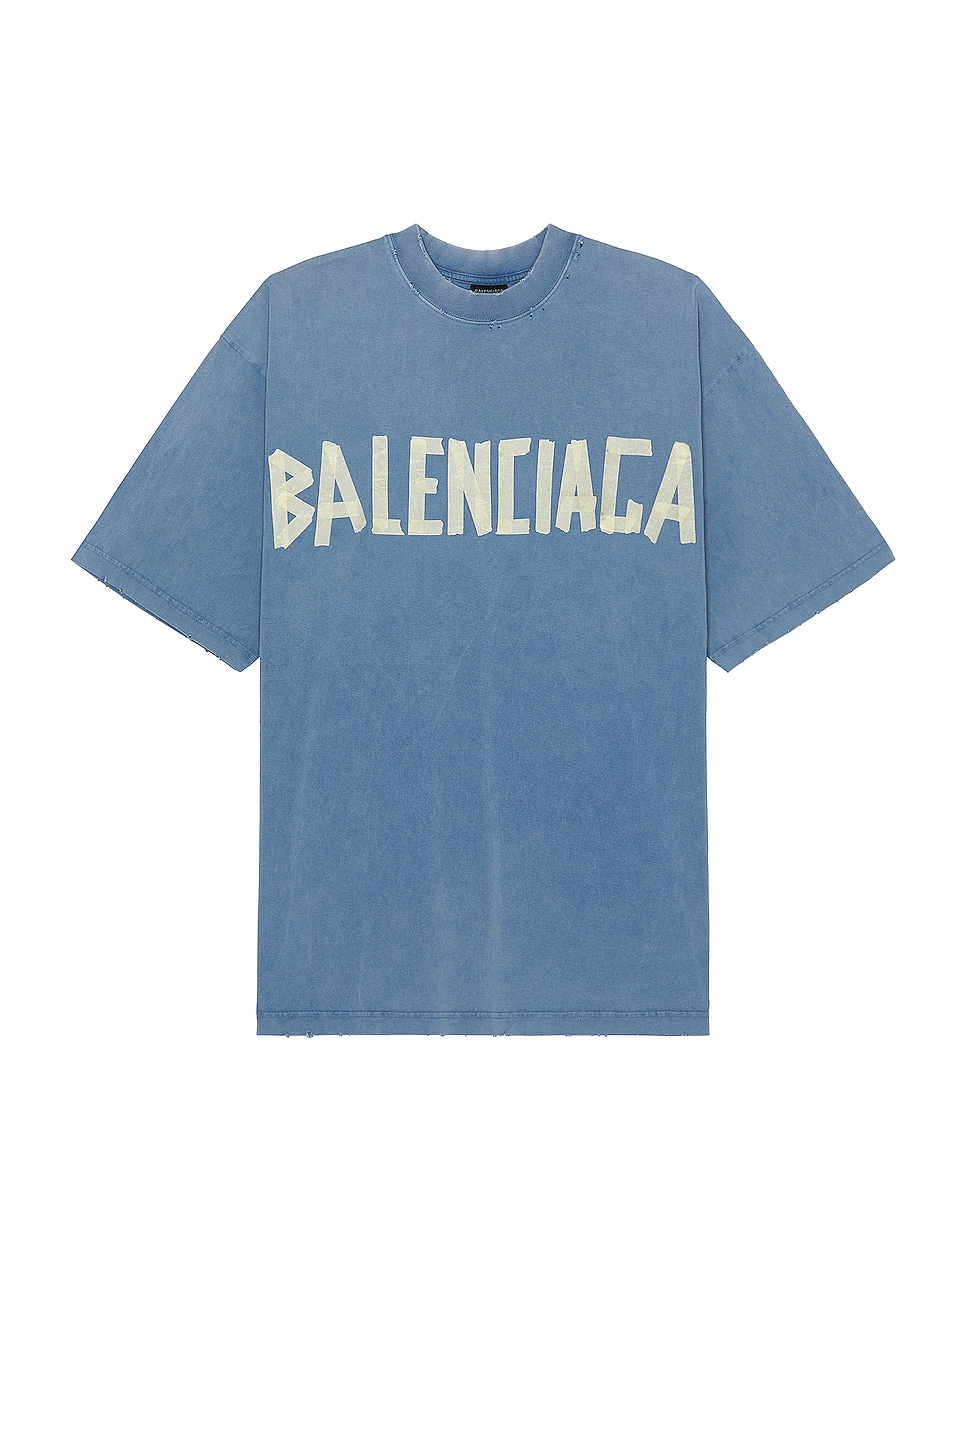 Image 1 of Balenciaga Medium Fit T-shirt in Faded Blue